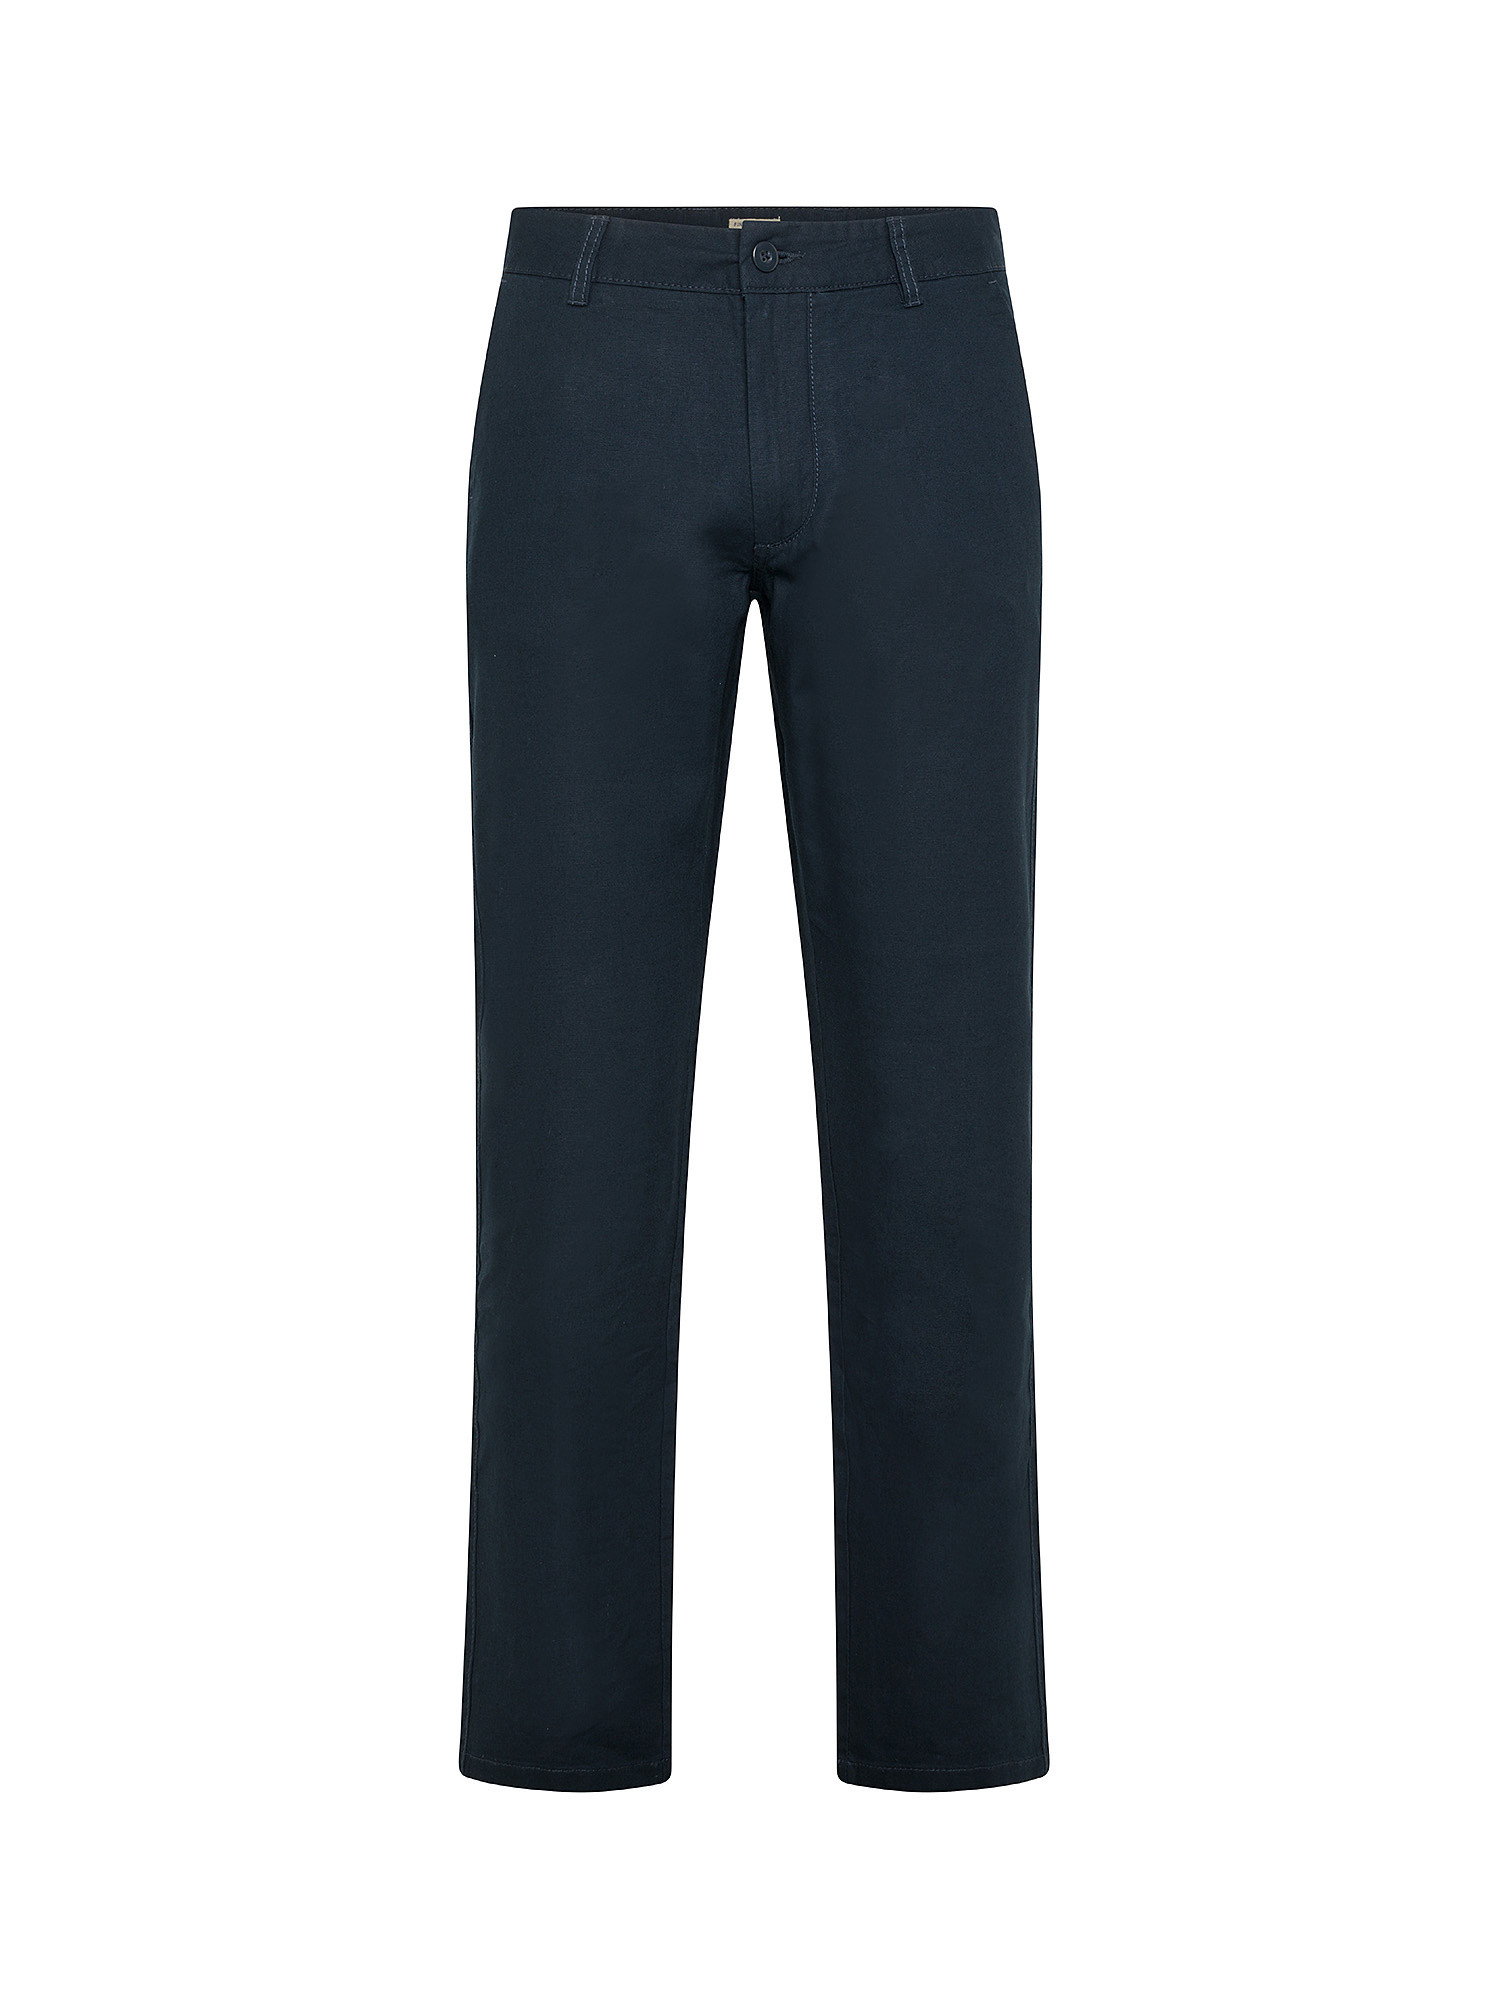 JCT - Pantaloni chino in misto lino, Blu scuro, large image number 0